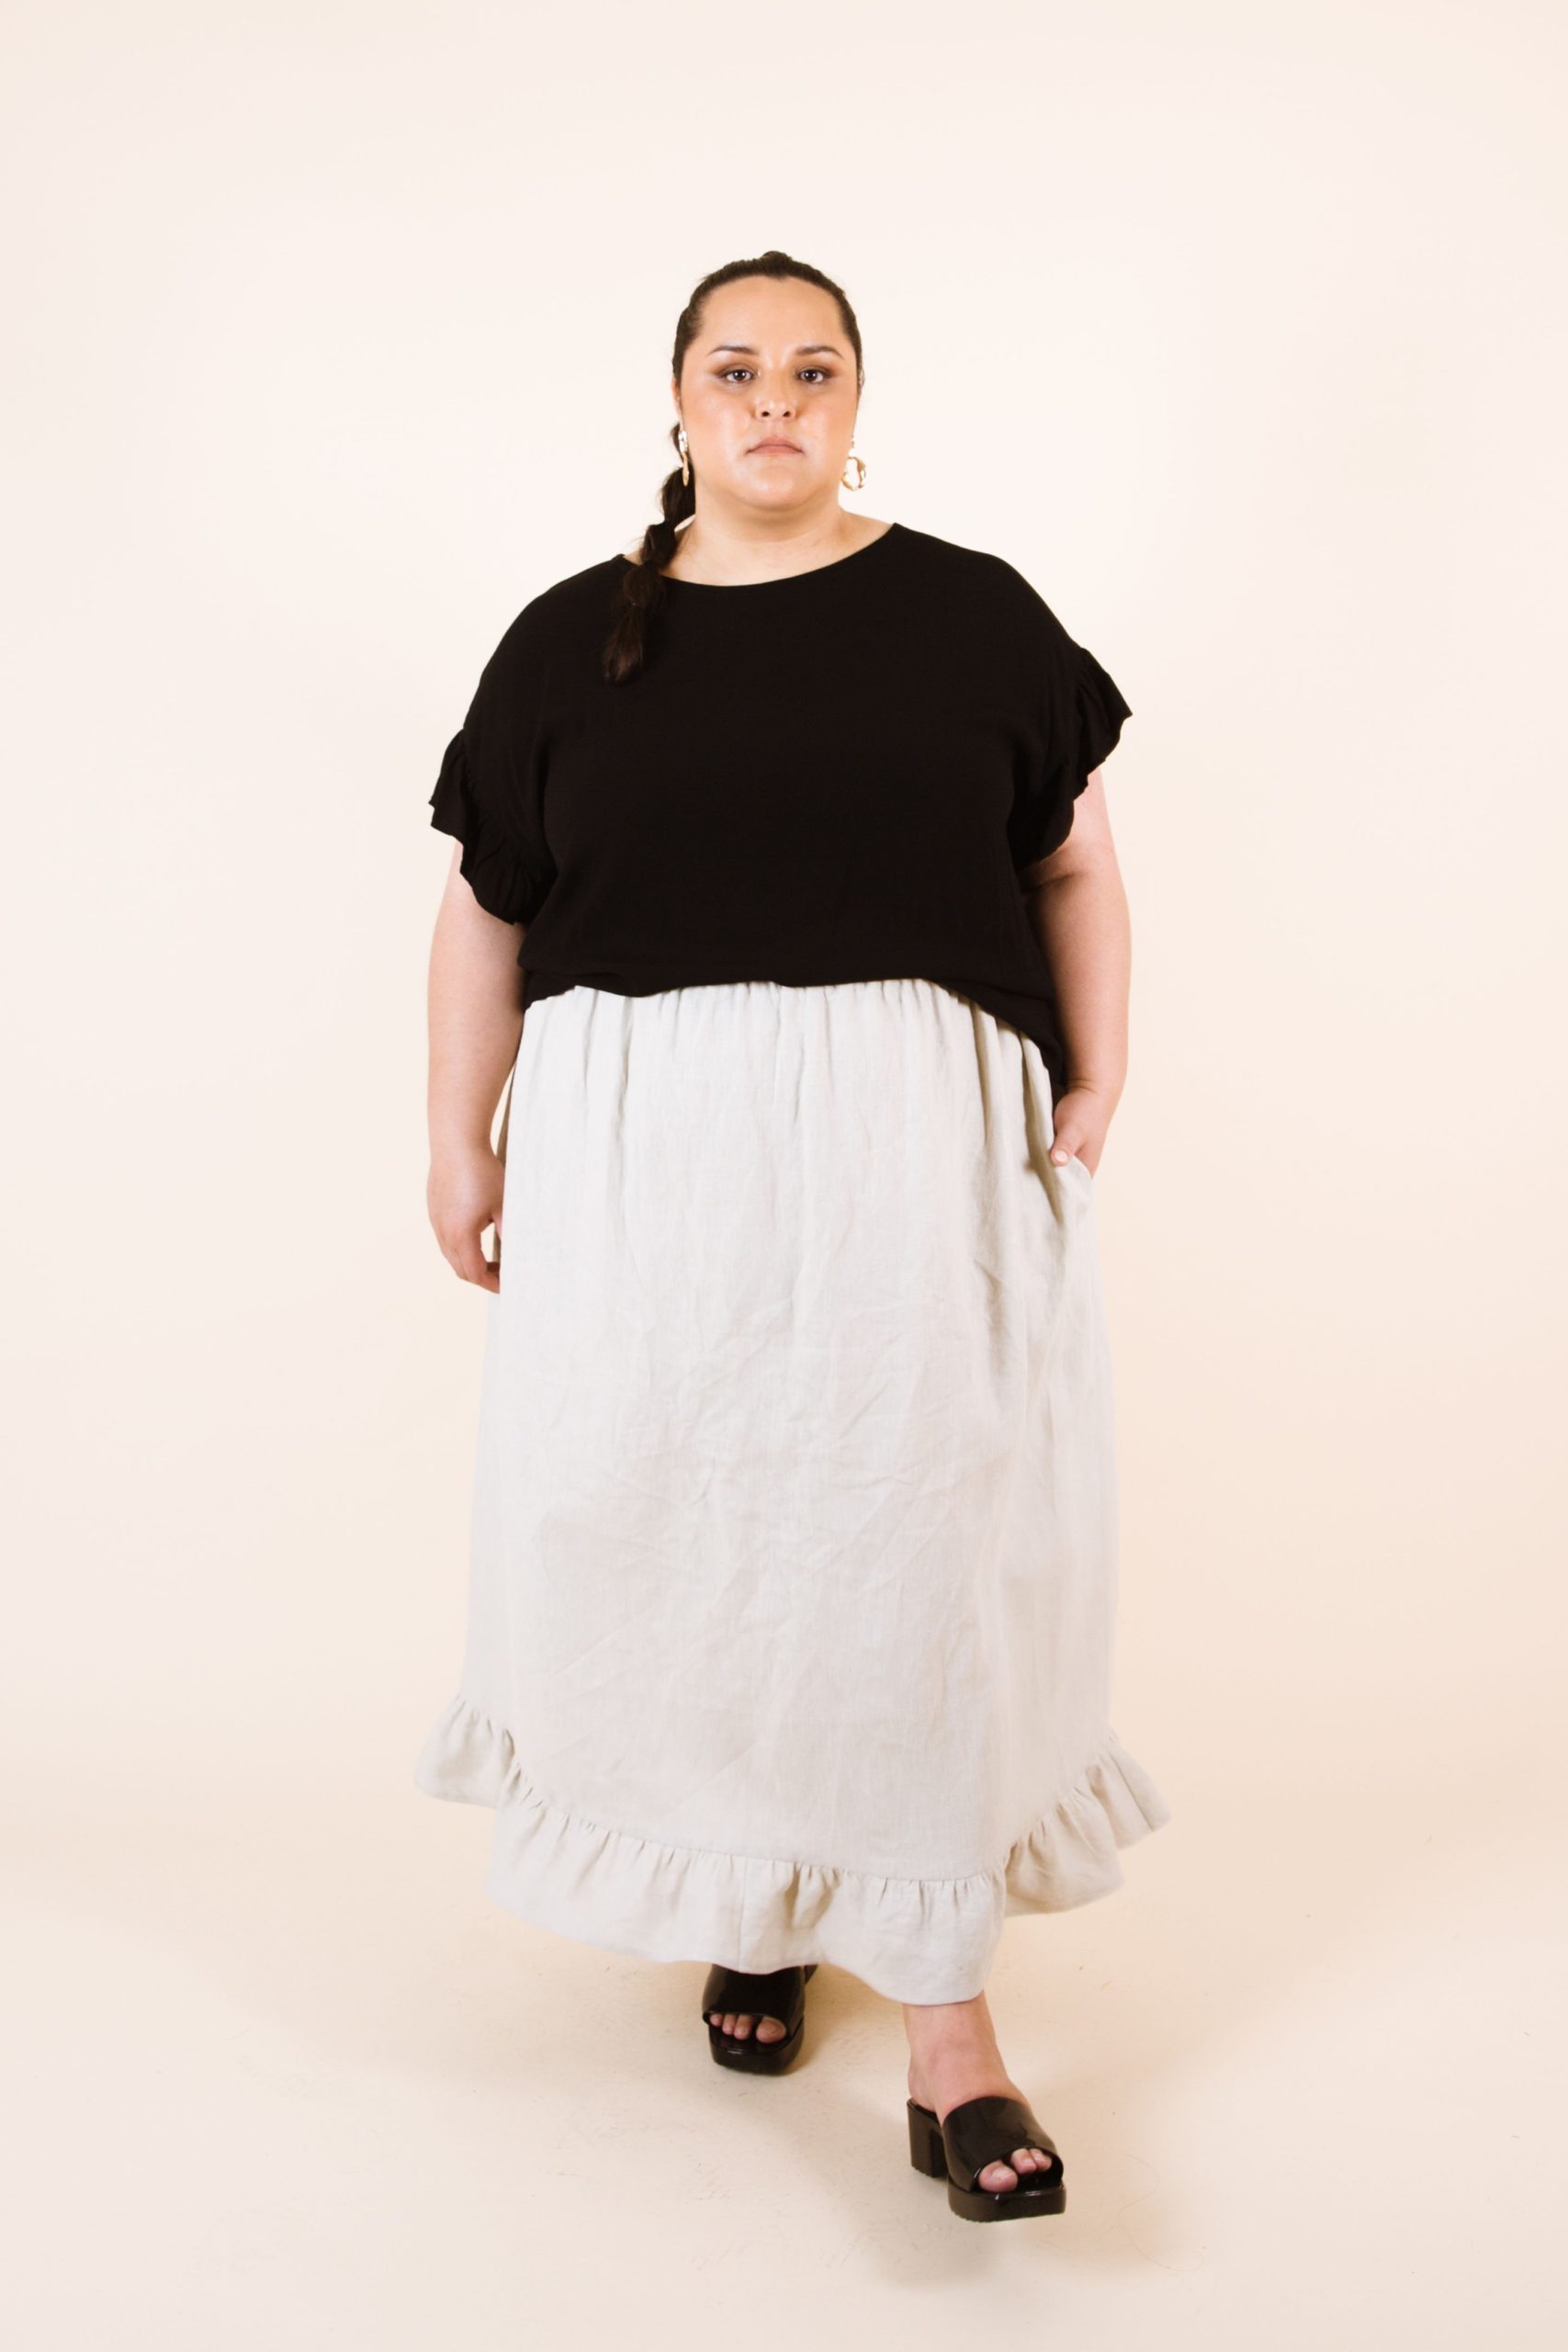 Papercut Estella Dress/Top/Skirt UK - Stonemountain & Daughter Fabrics